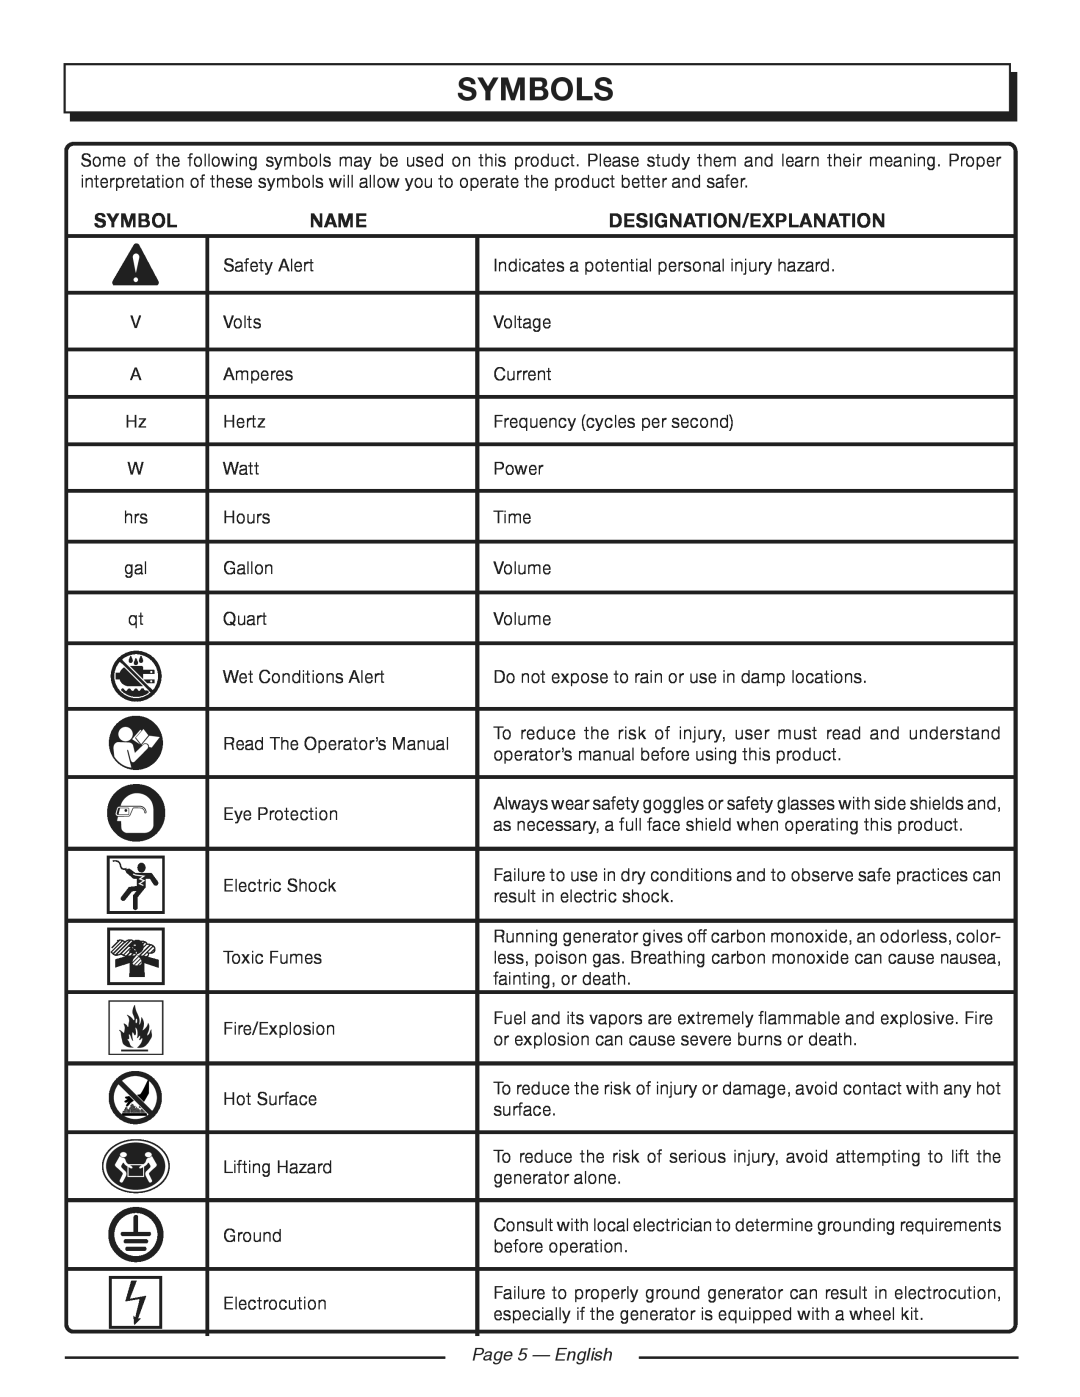 Homelite HGCA3000 manuel dutilisation Symbols, Name, Designation/Explanation, Page 5 - English 